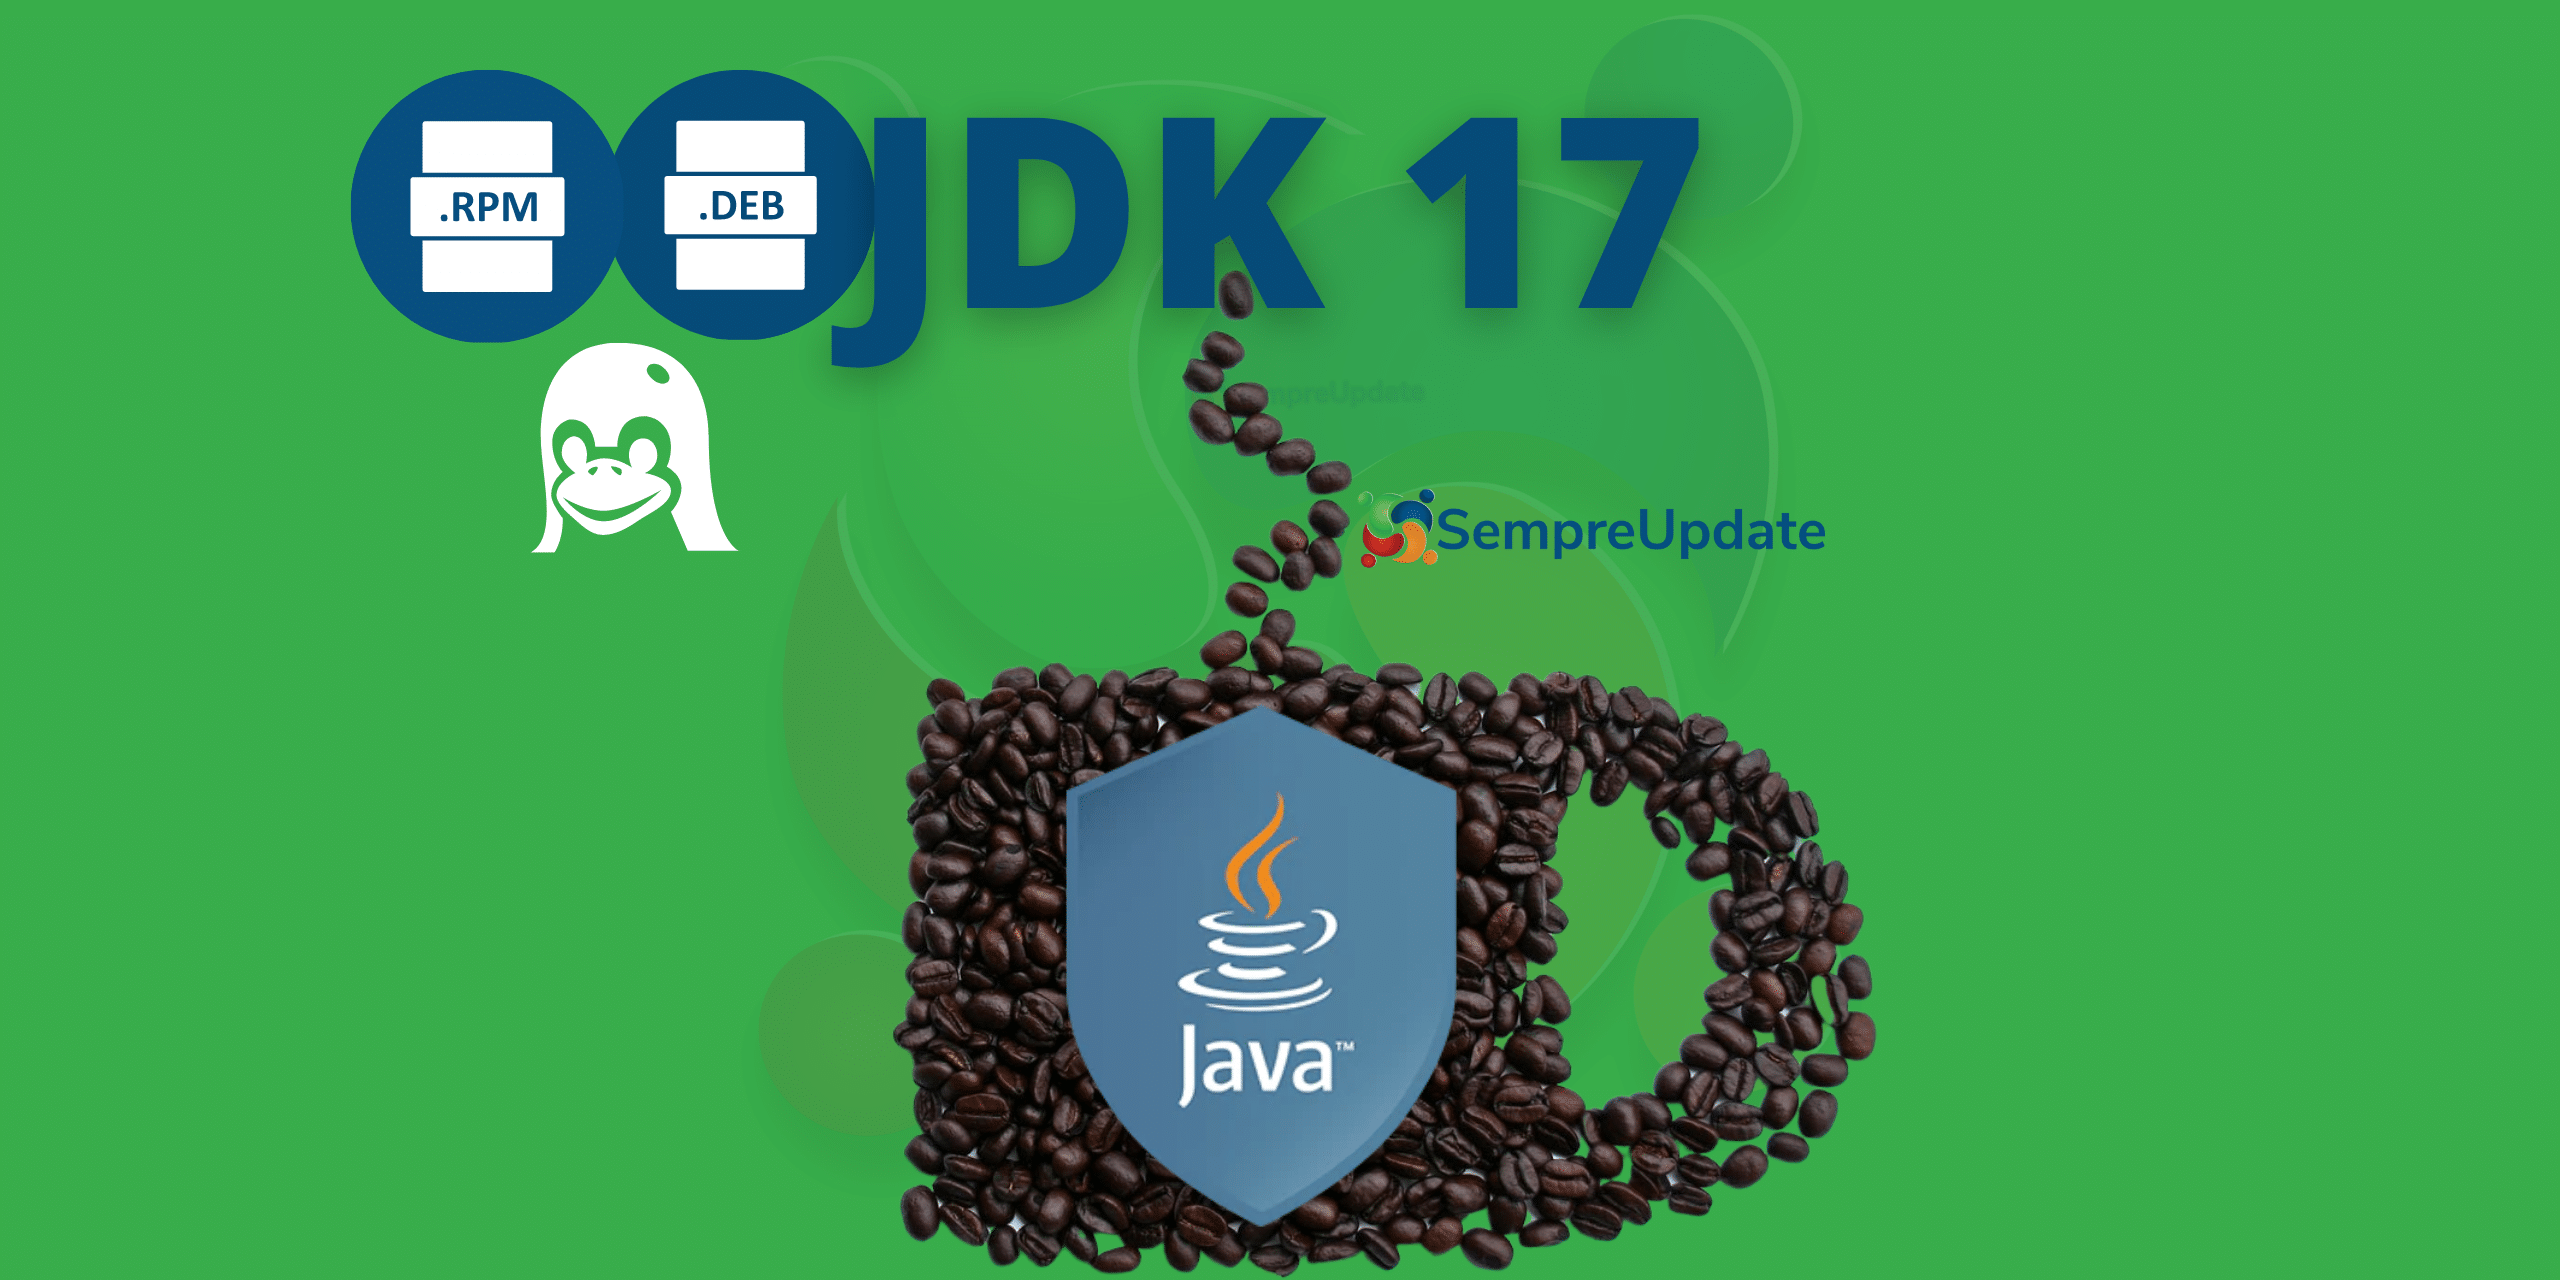 como-instalar-o-oracle-jdk-17-no-ubuntu-linux-fedora-opensuse-debian-e-derivados